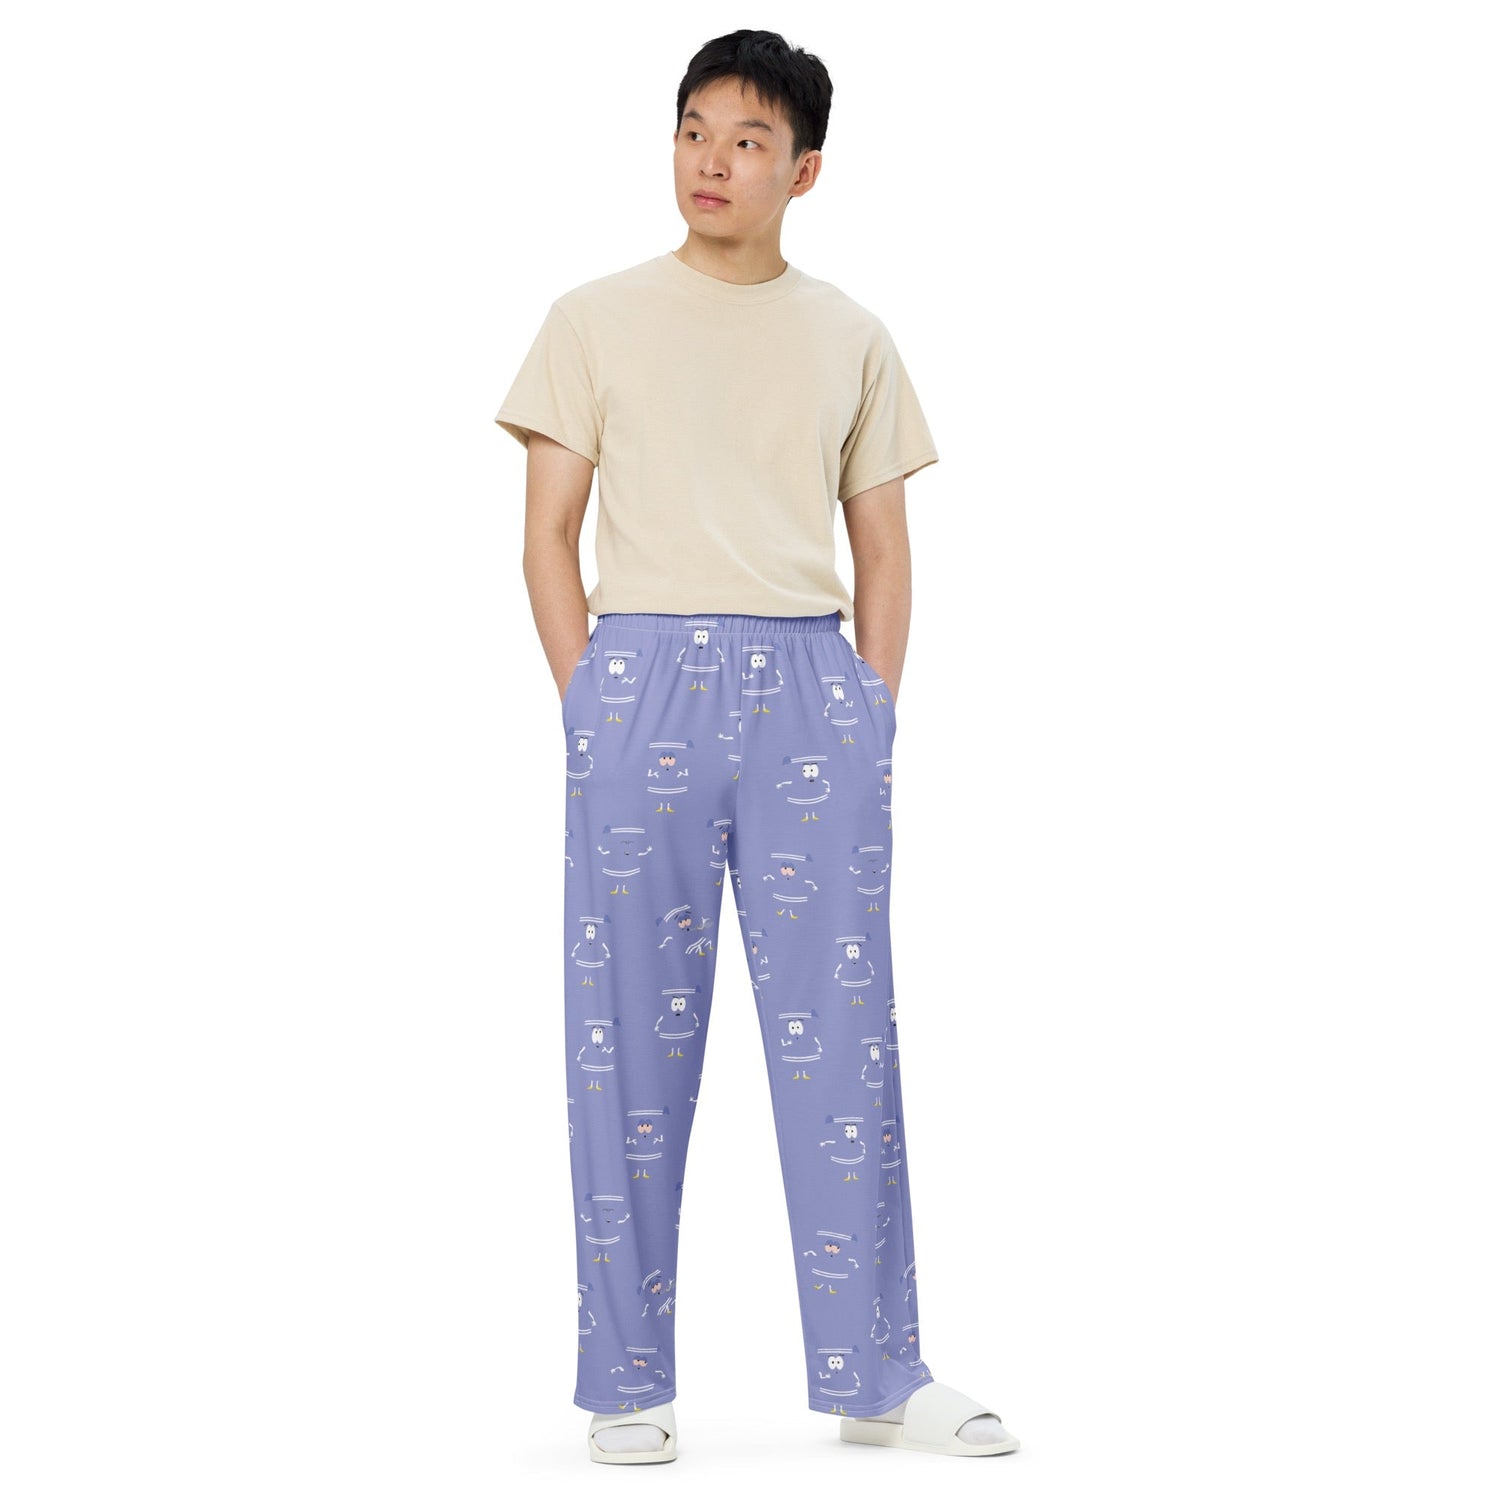 South Park Towelie Pajama Pants - Paramount Shop